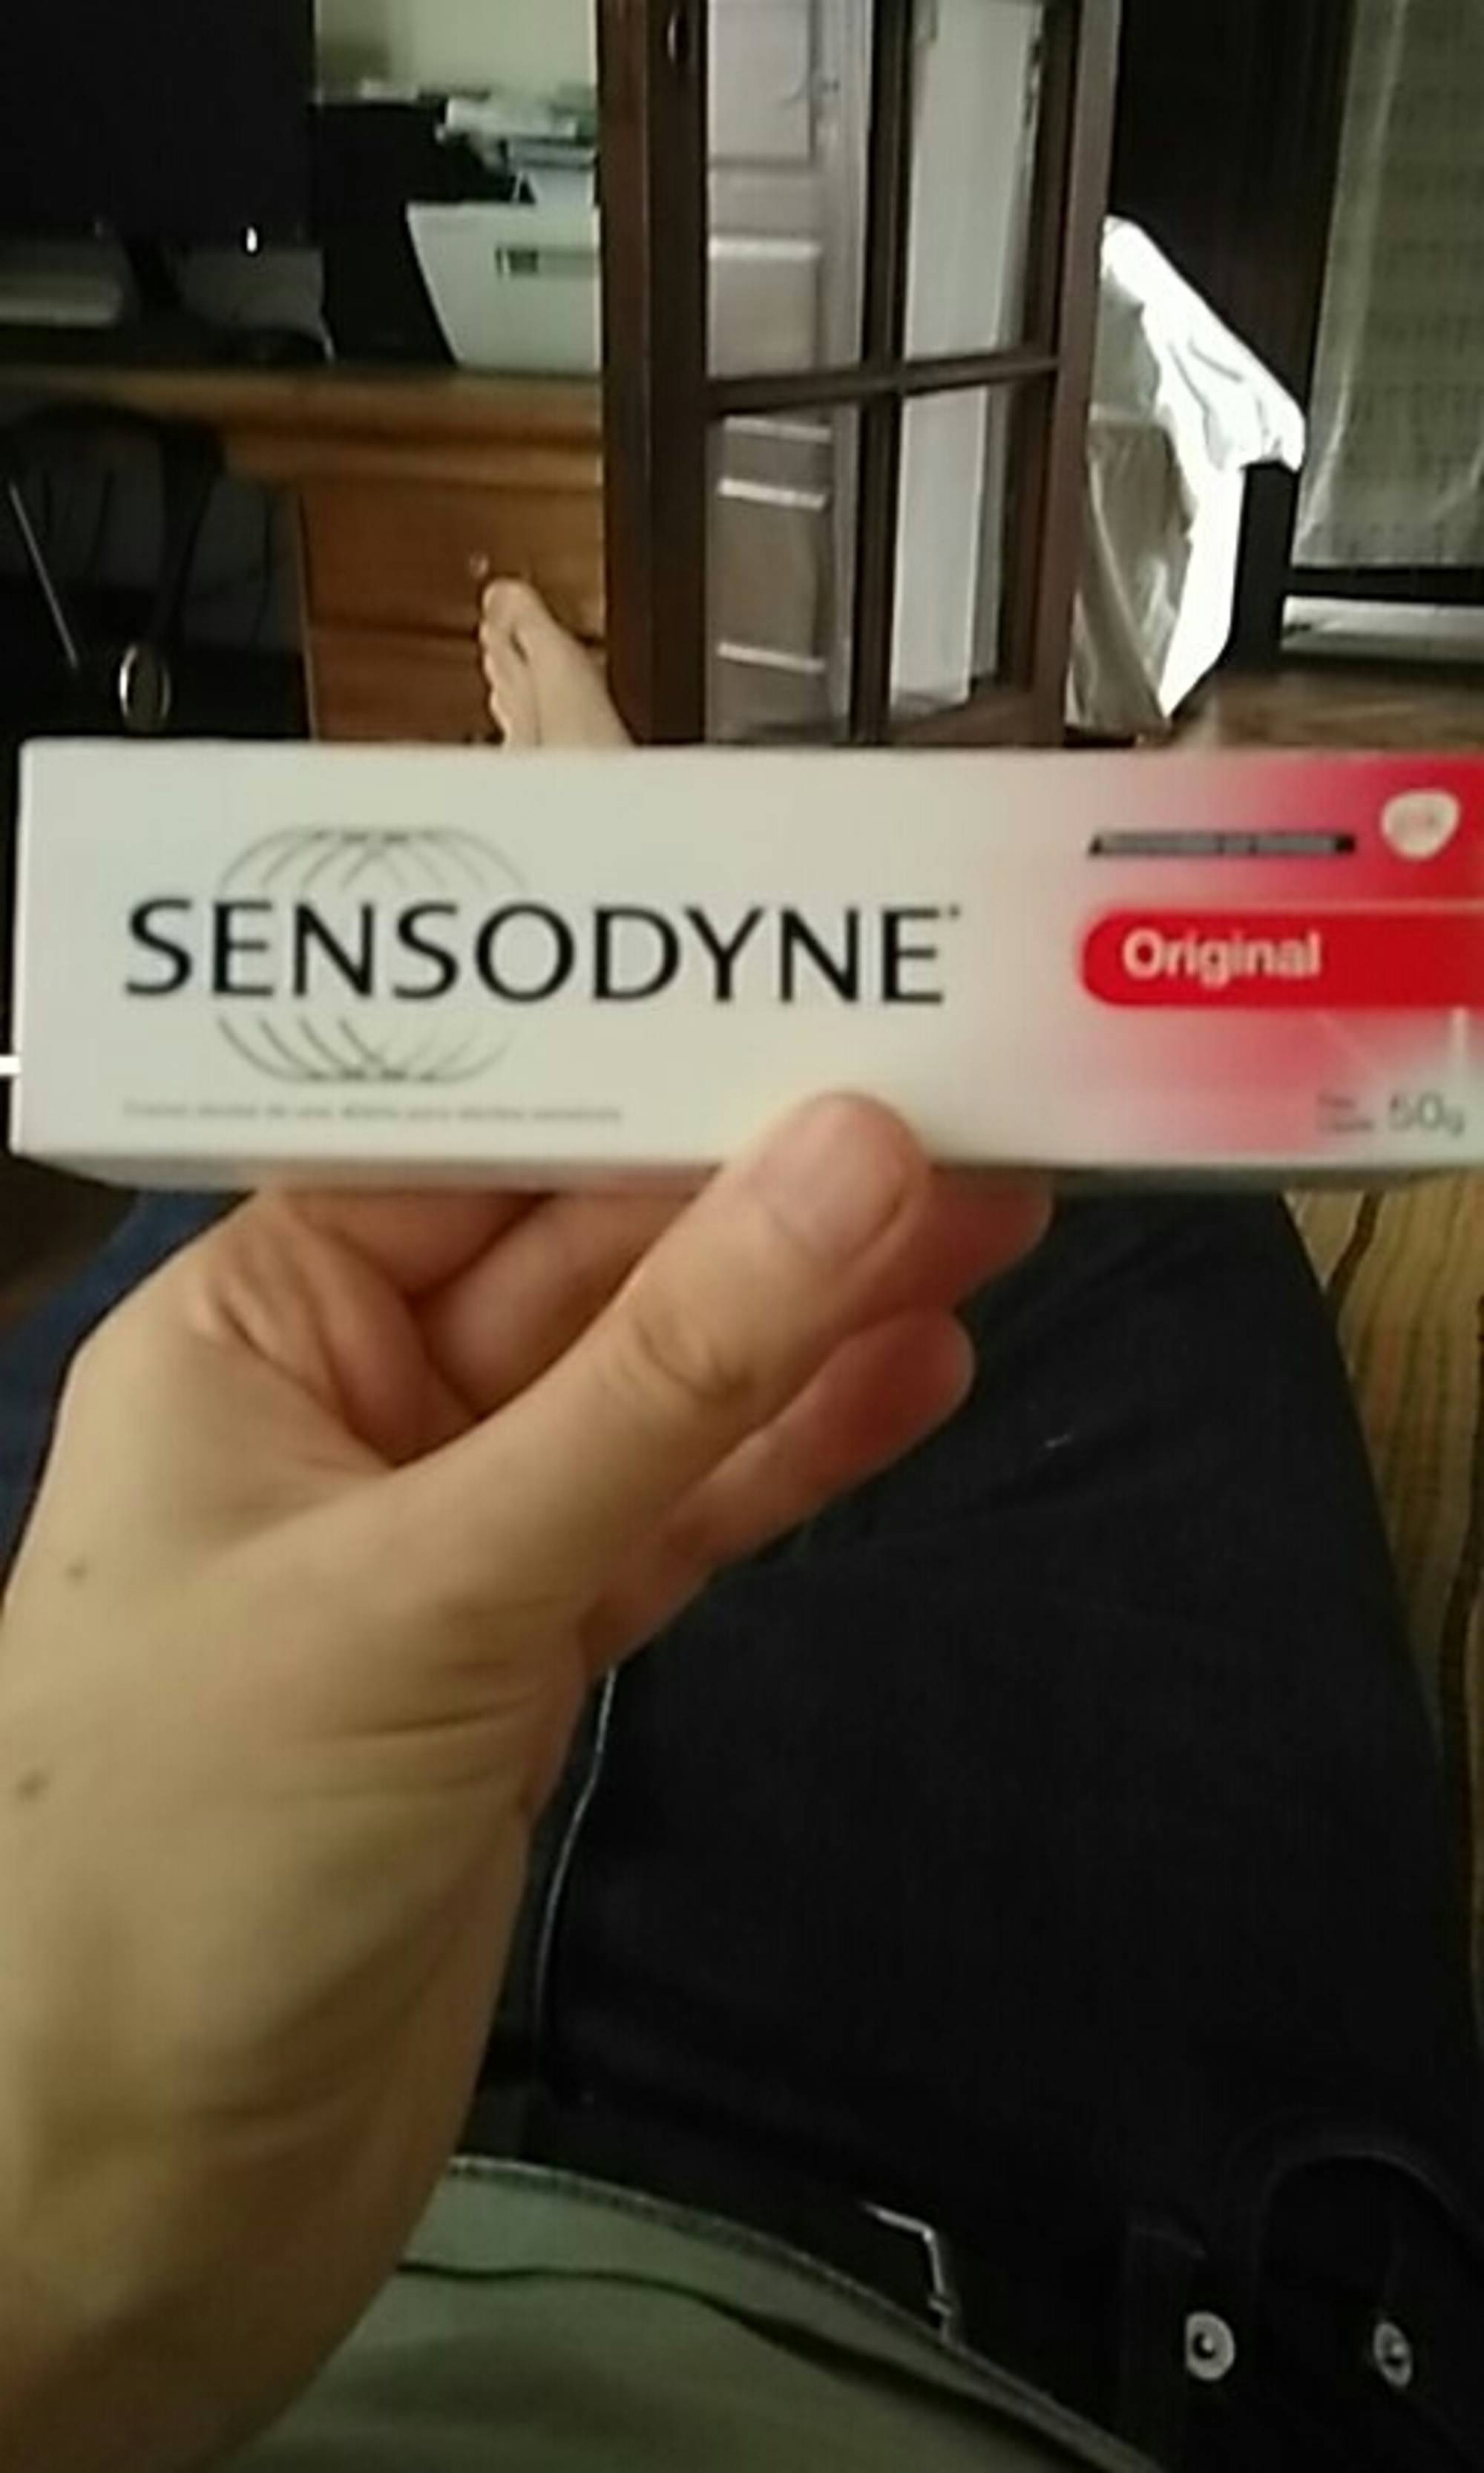 SENSODYNE - Original - Dentifrice